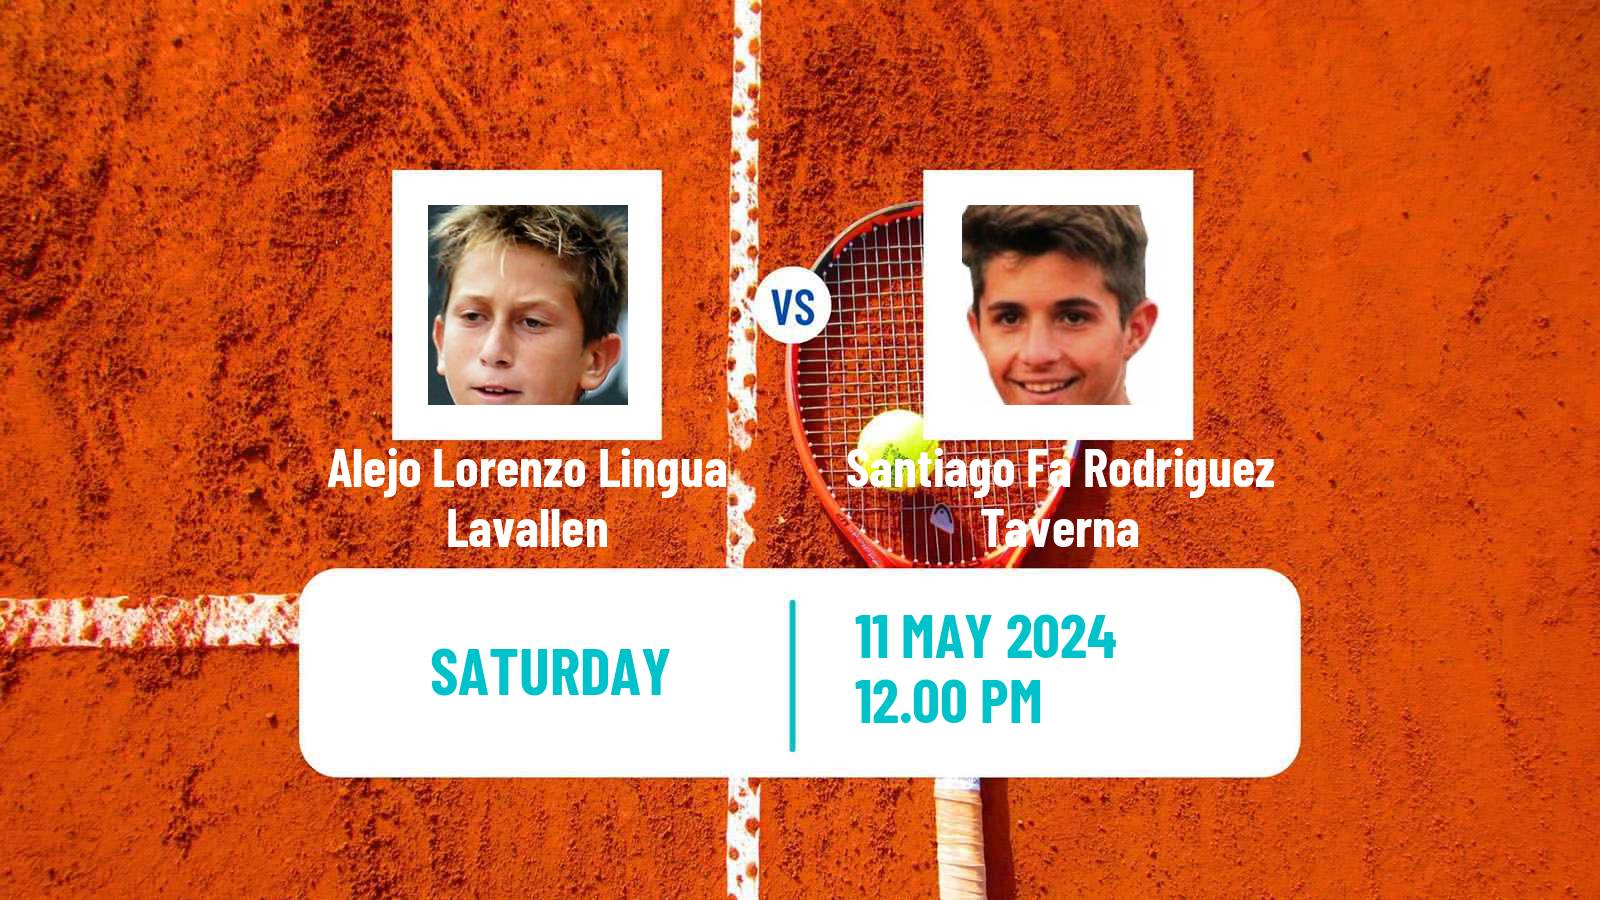 Tennis Santos Challenger Men Alejo Lorenzo Lingua Lavallen - Santiago Fa Rodriguez Taverna